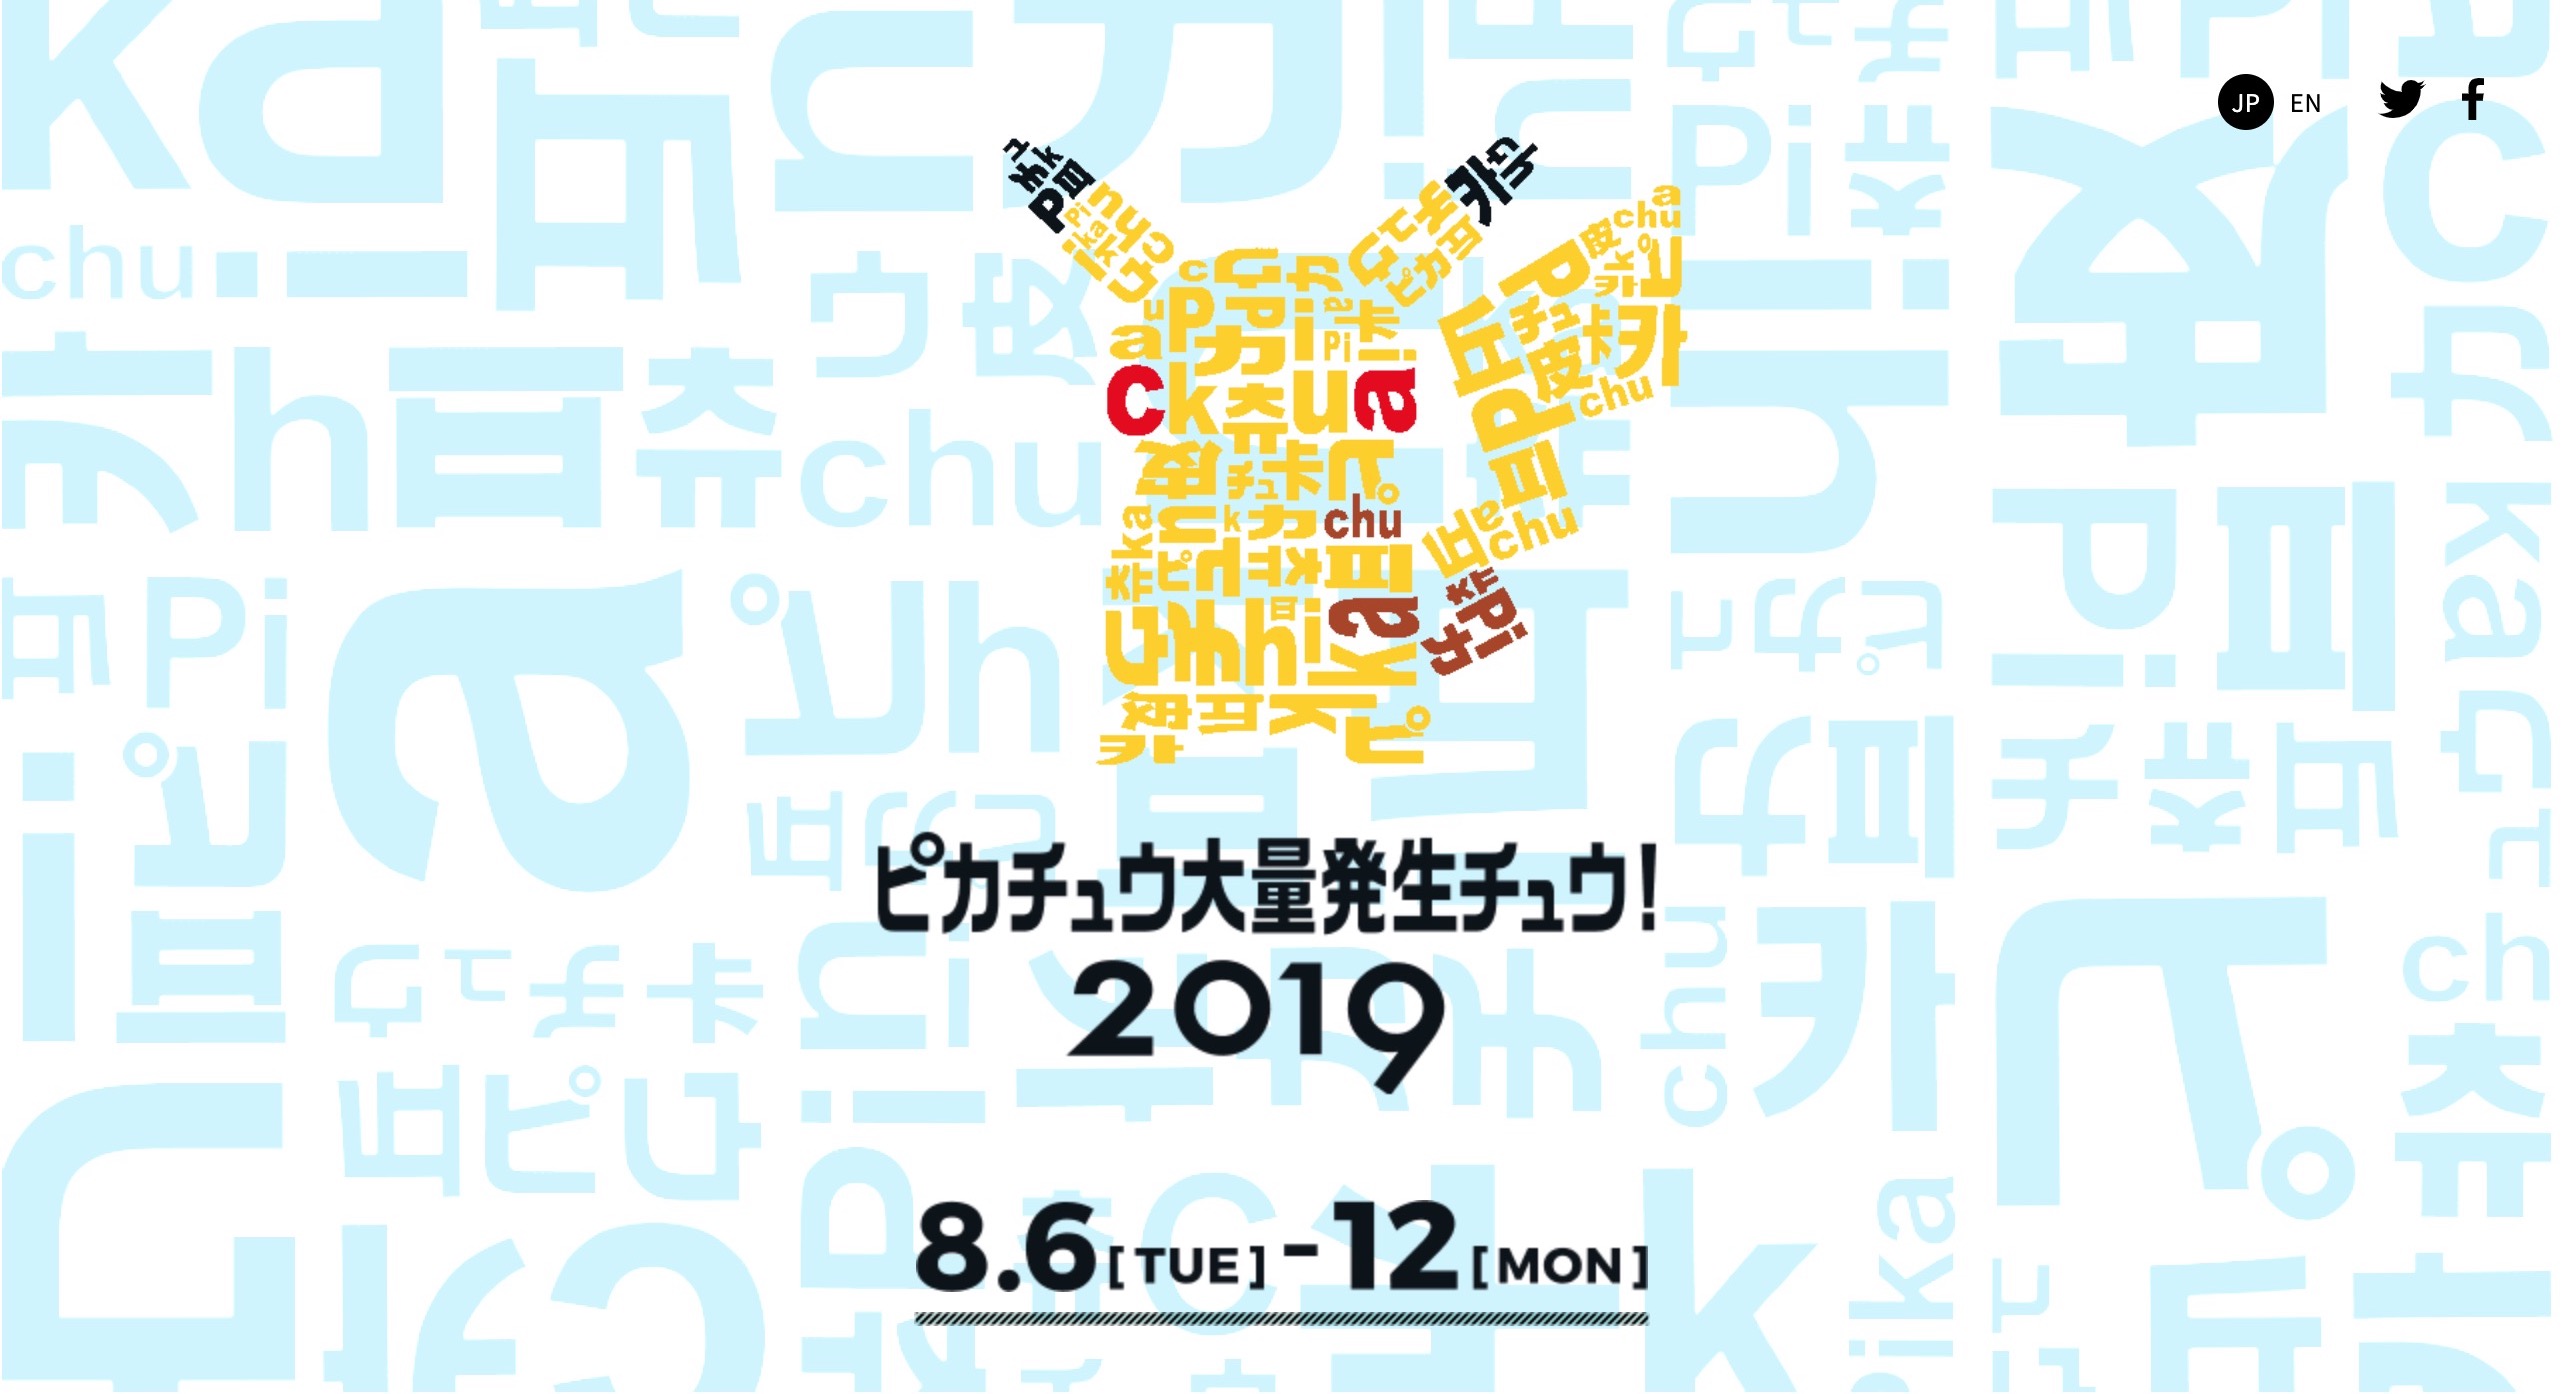 Pokemon Go Fest が日本で初開催決定 抽選で参加可能に